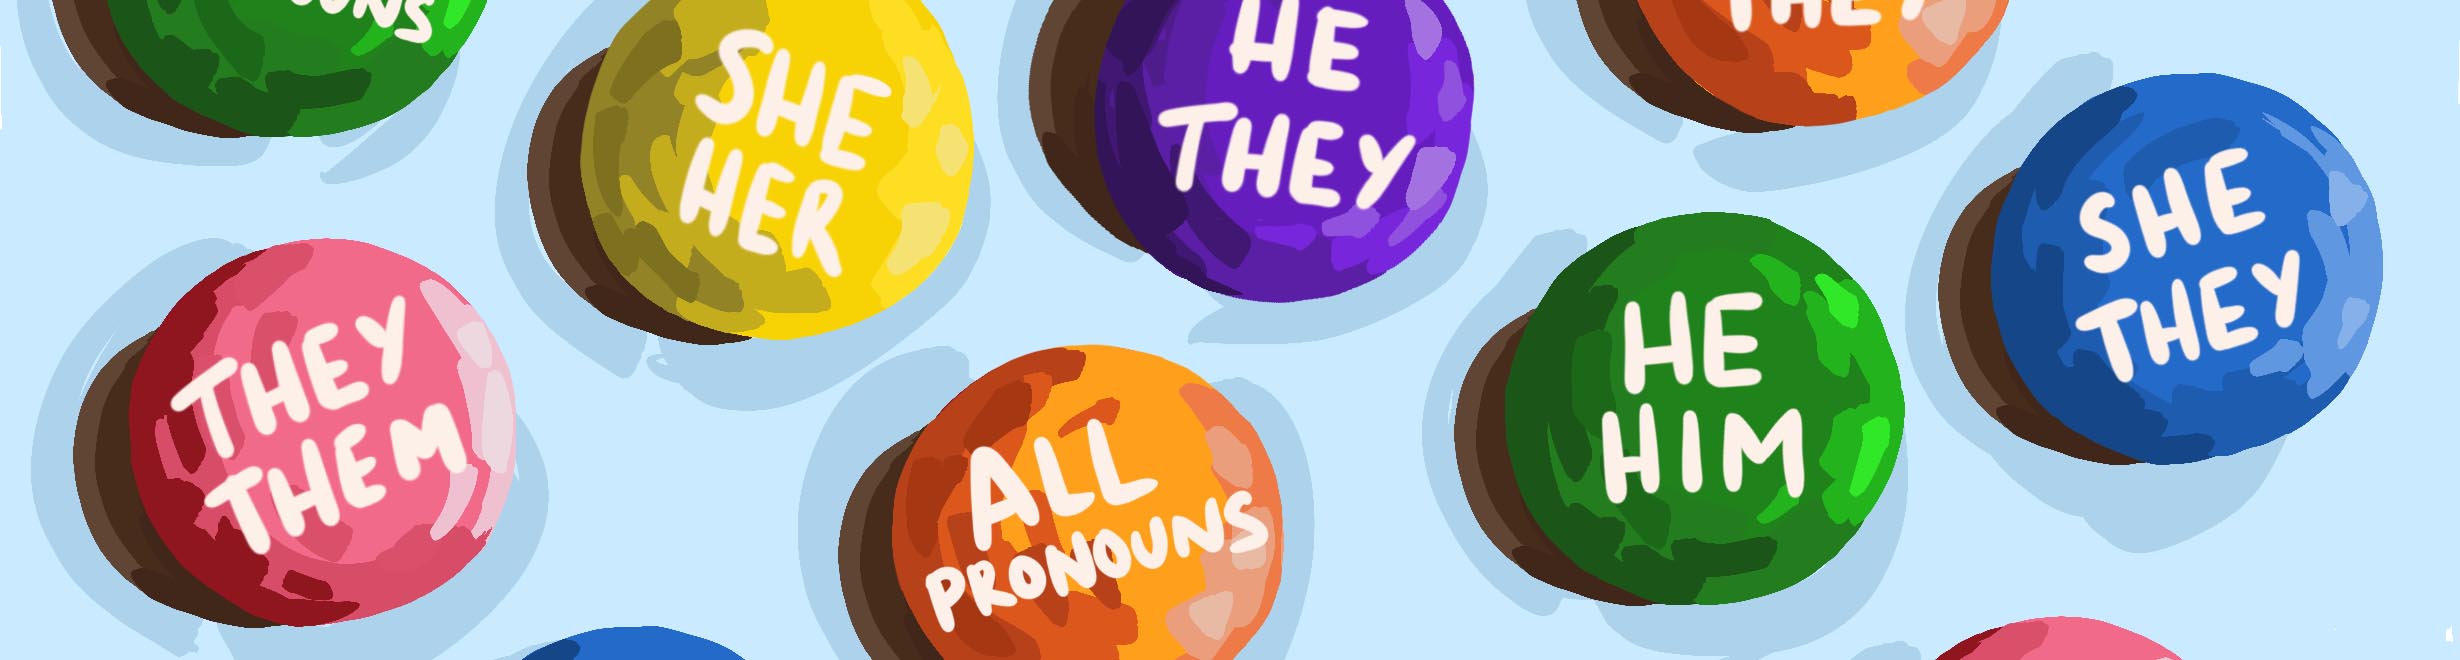 list of pronouns